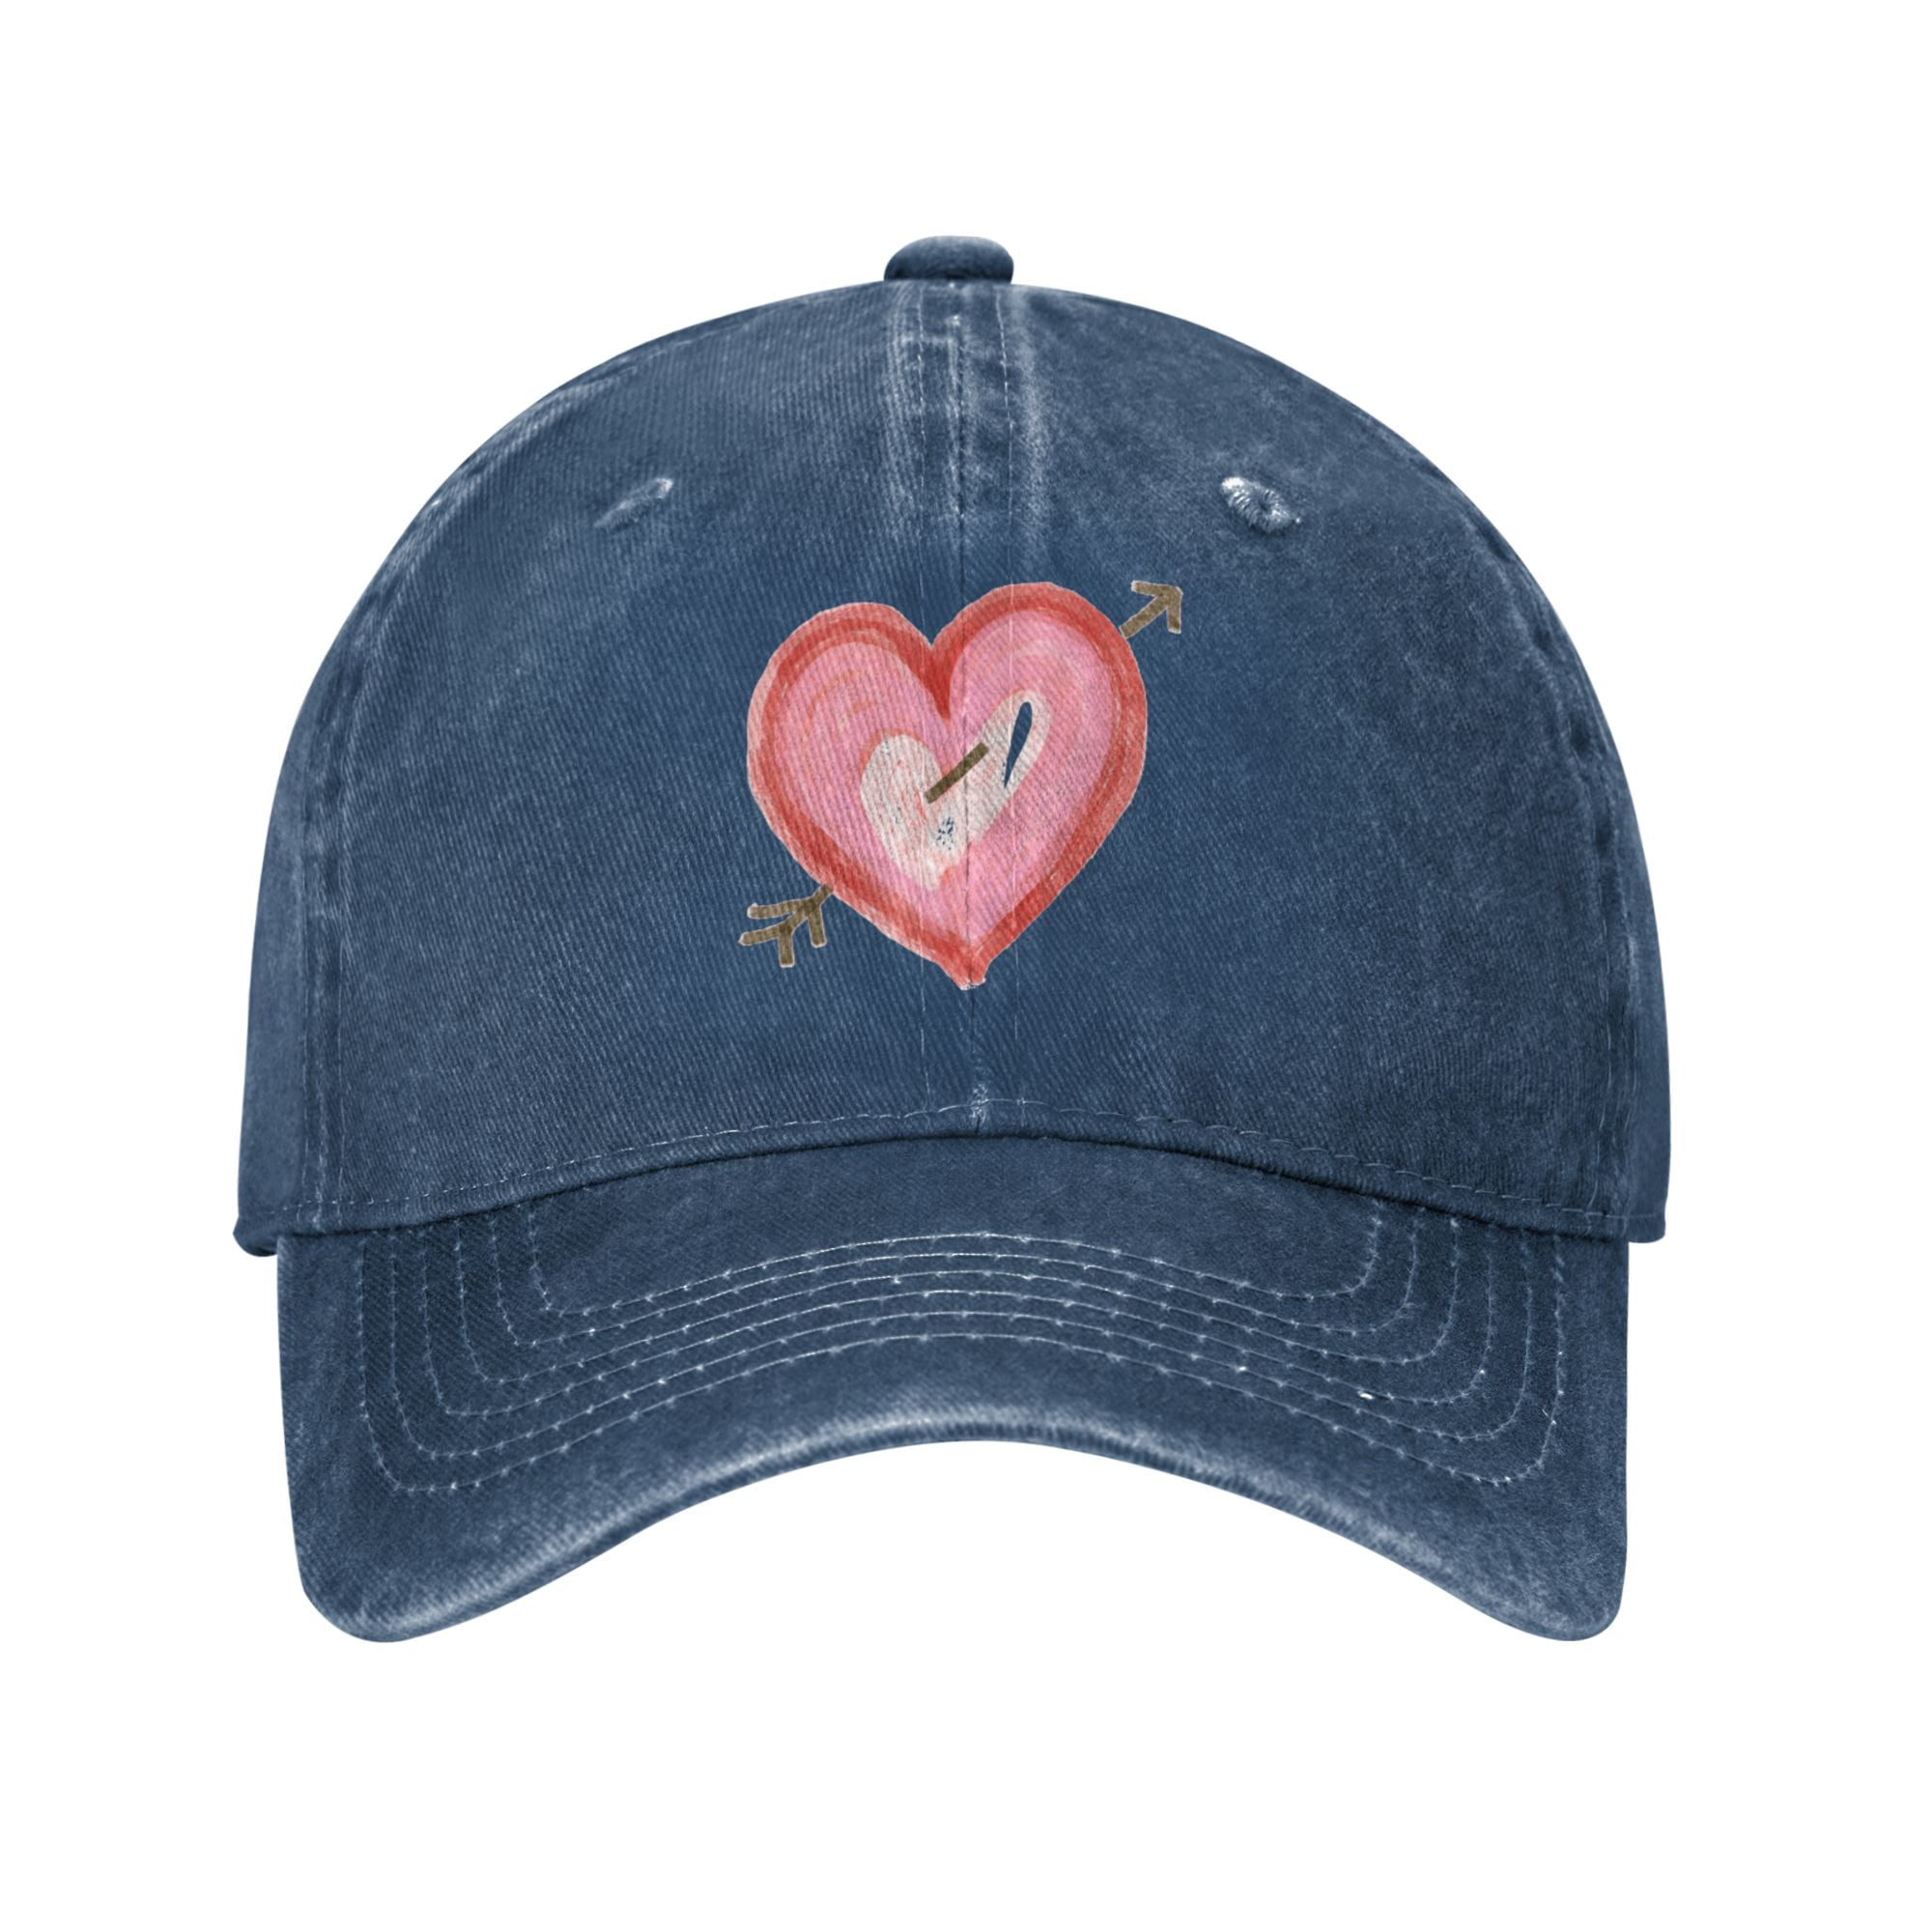 DouZhe Adjustable Washed Cotton Baseball Cap - Heart Shape Cupid Love Arrow  Prints Vintage Dad Hat Unisex Sports Caps (Black) 